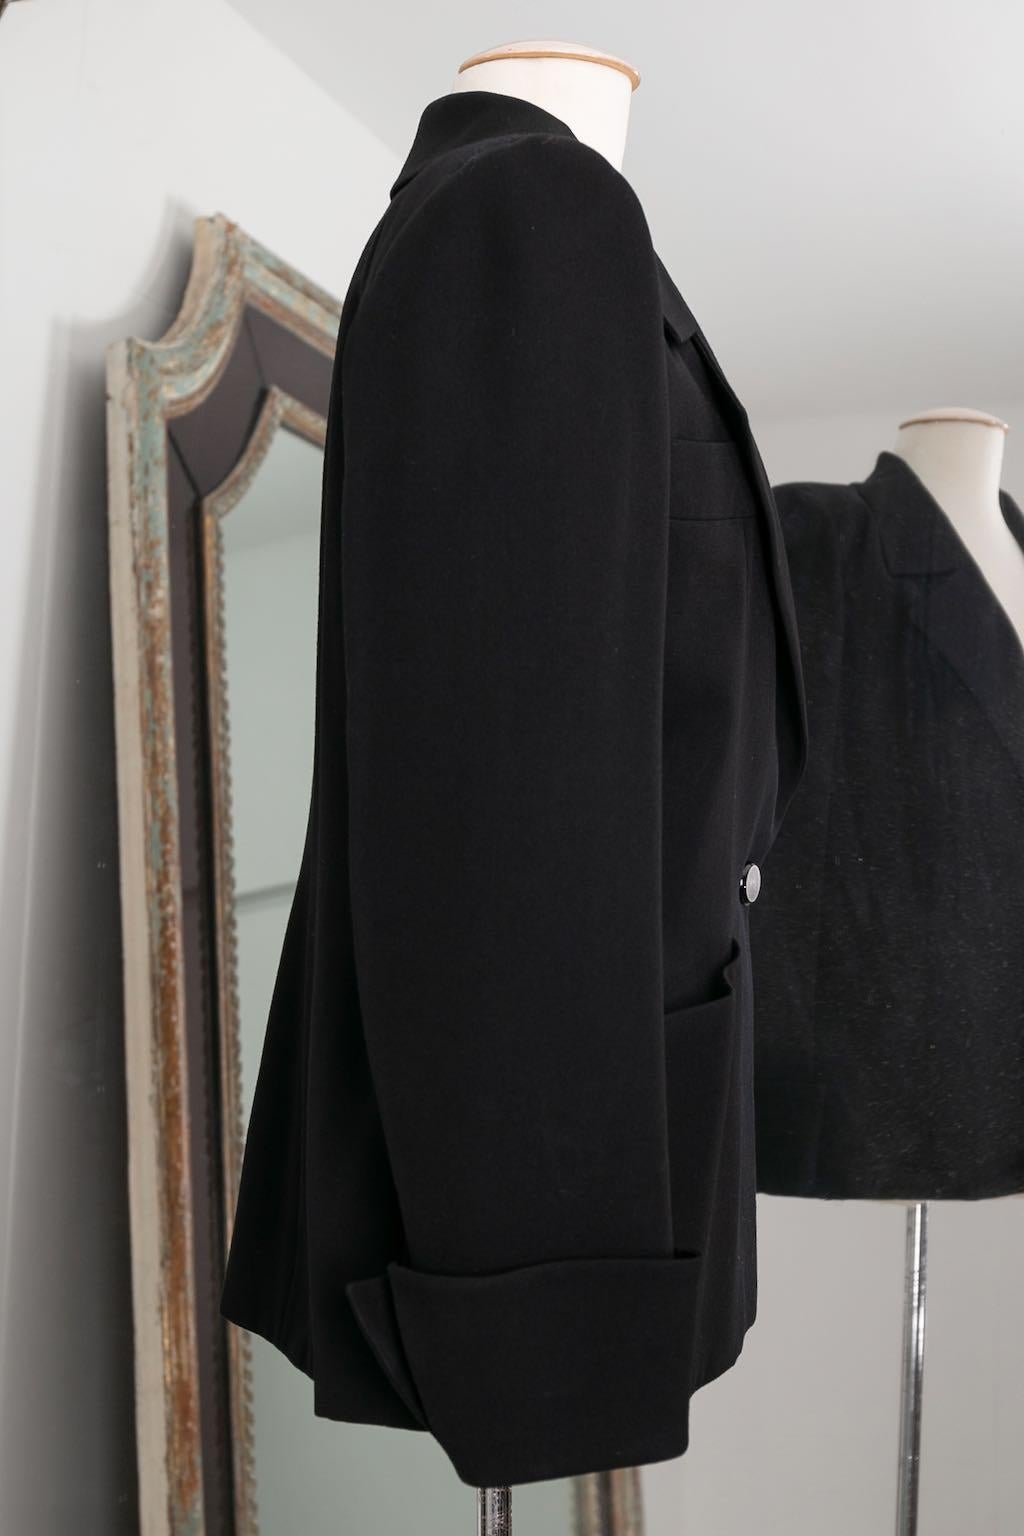 Yves Saint Laurent Haute Couture Black Skirt and Jacket Set, circa 1981/1982 12